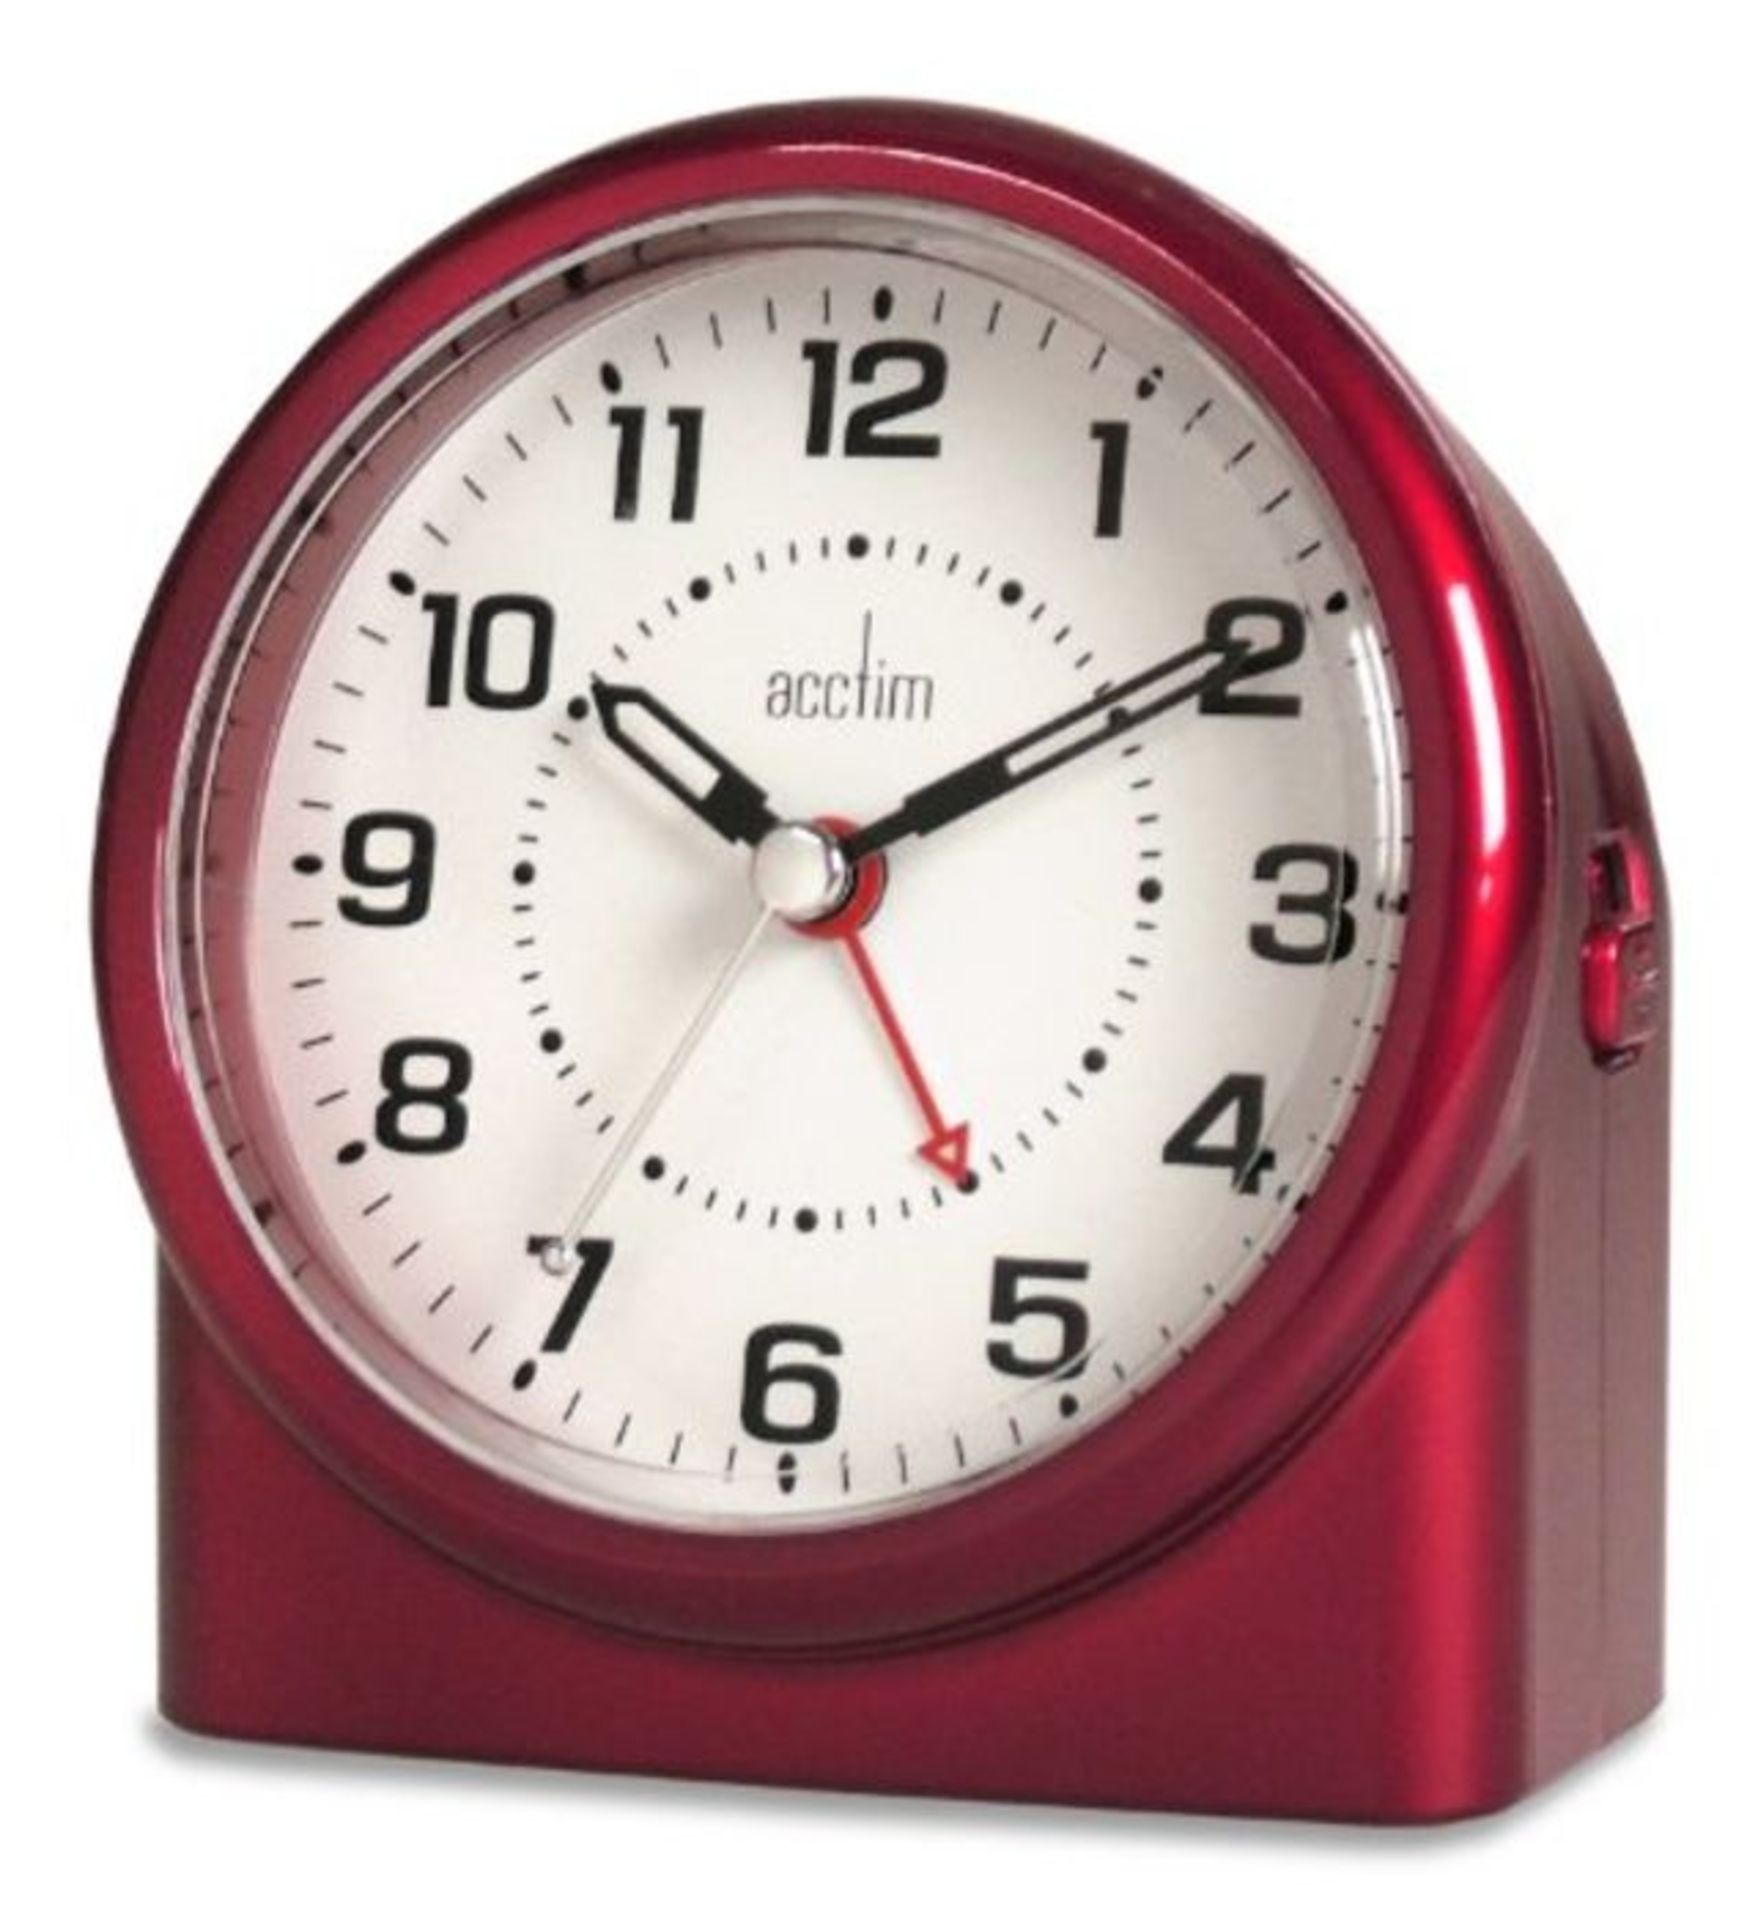 Acctim 14284 Central Alarm Clock, Red